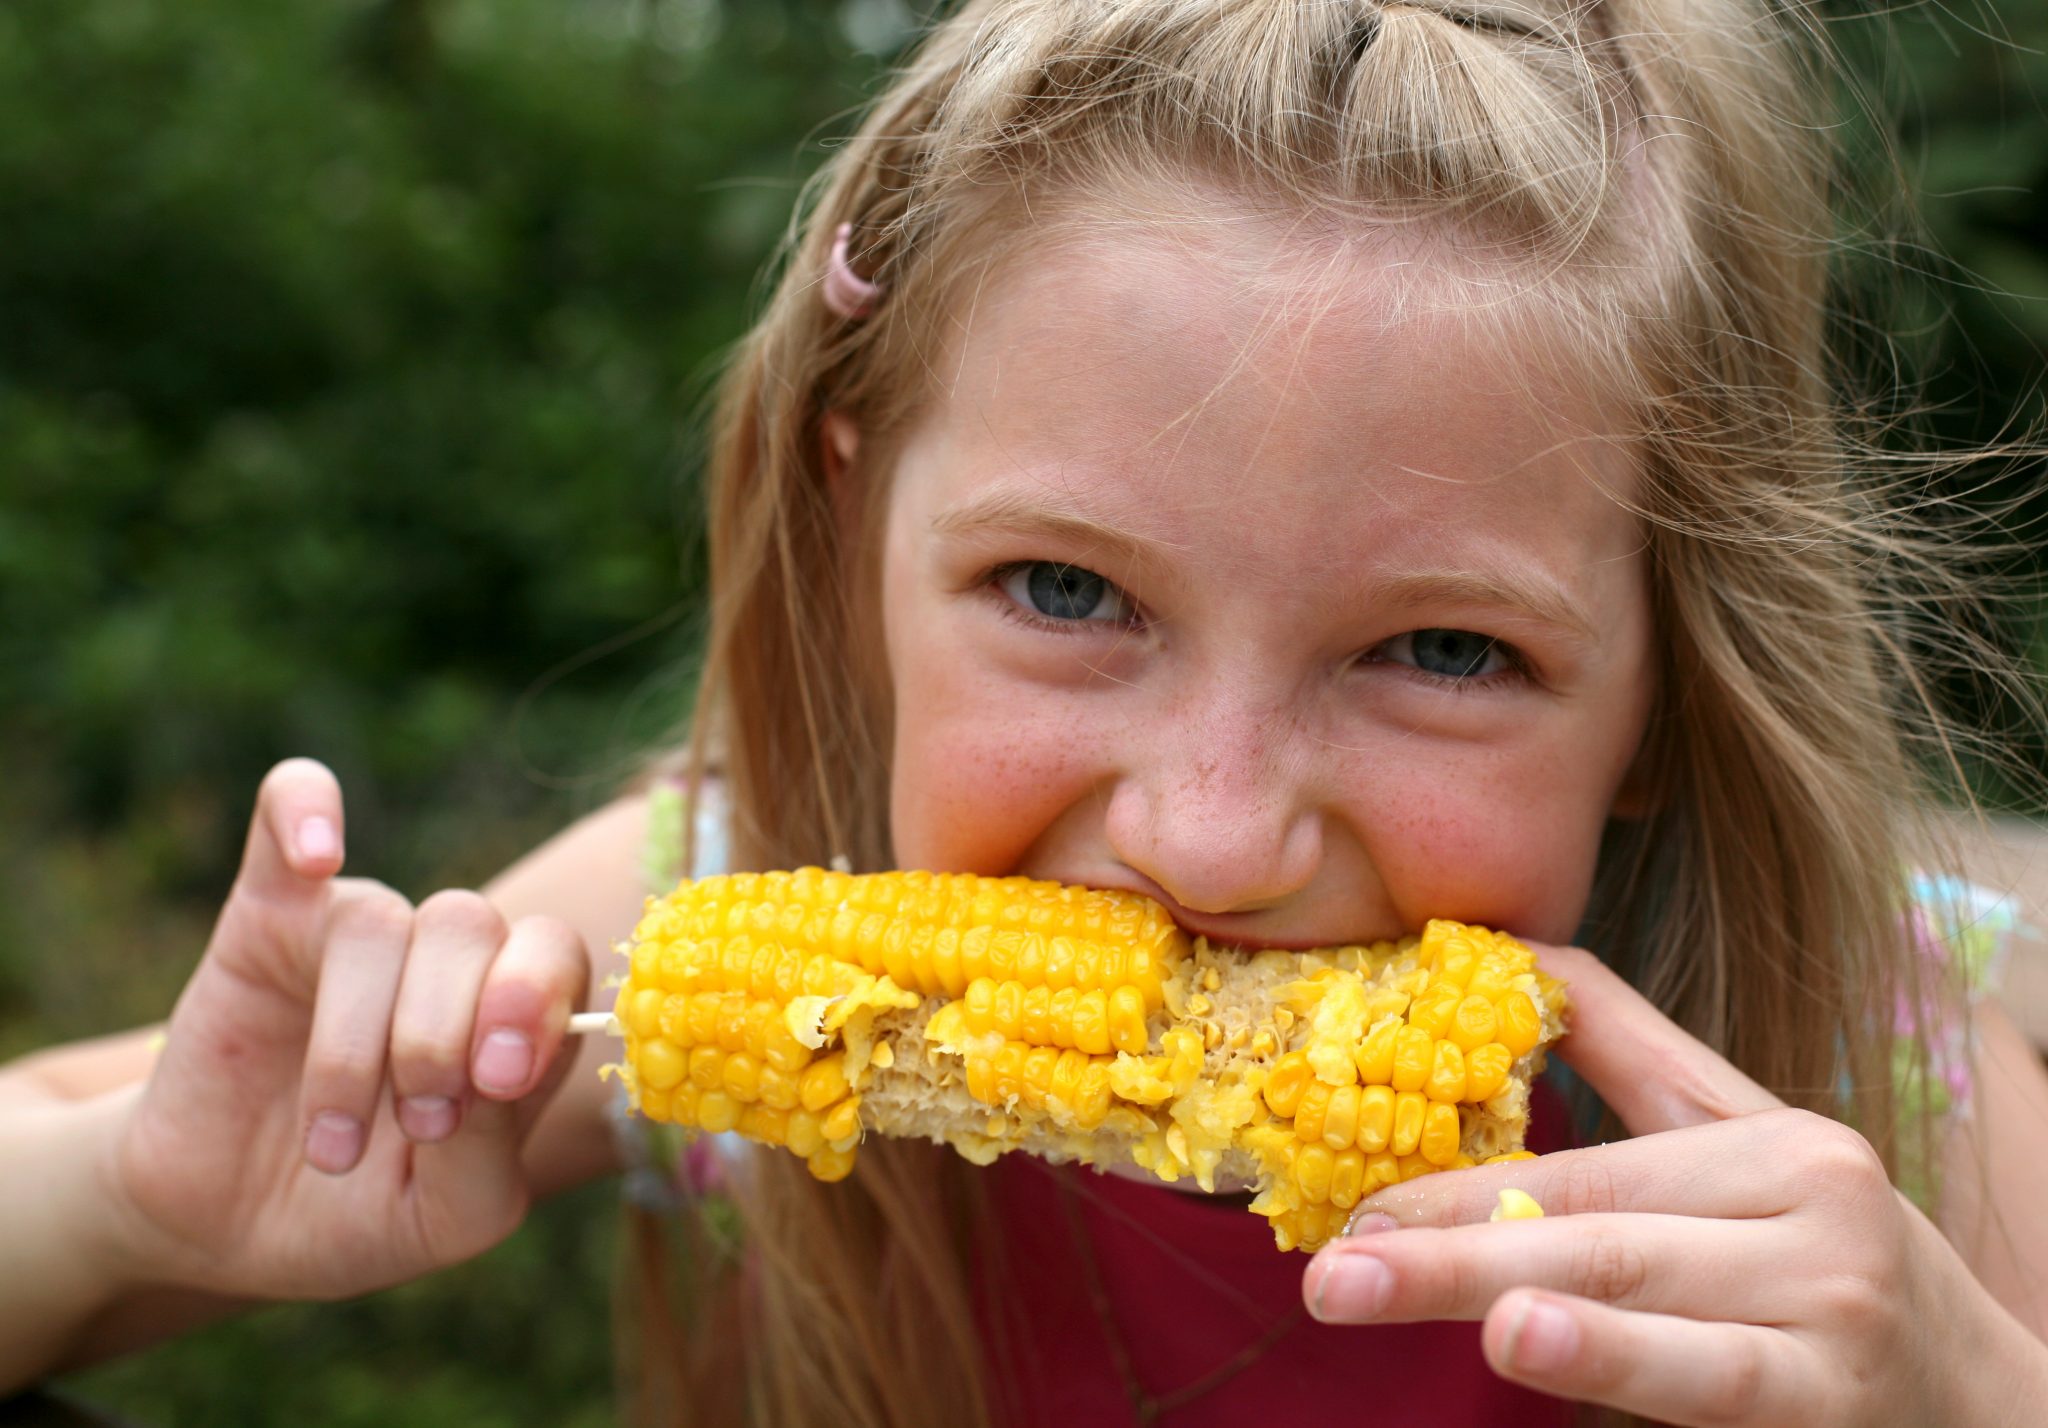 Young girl eating corn on the cob